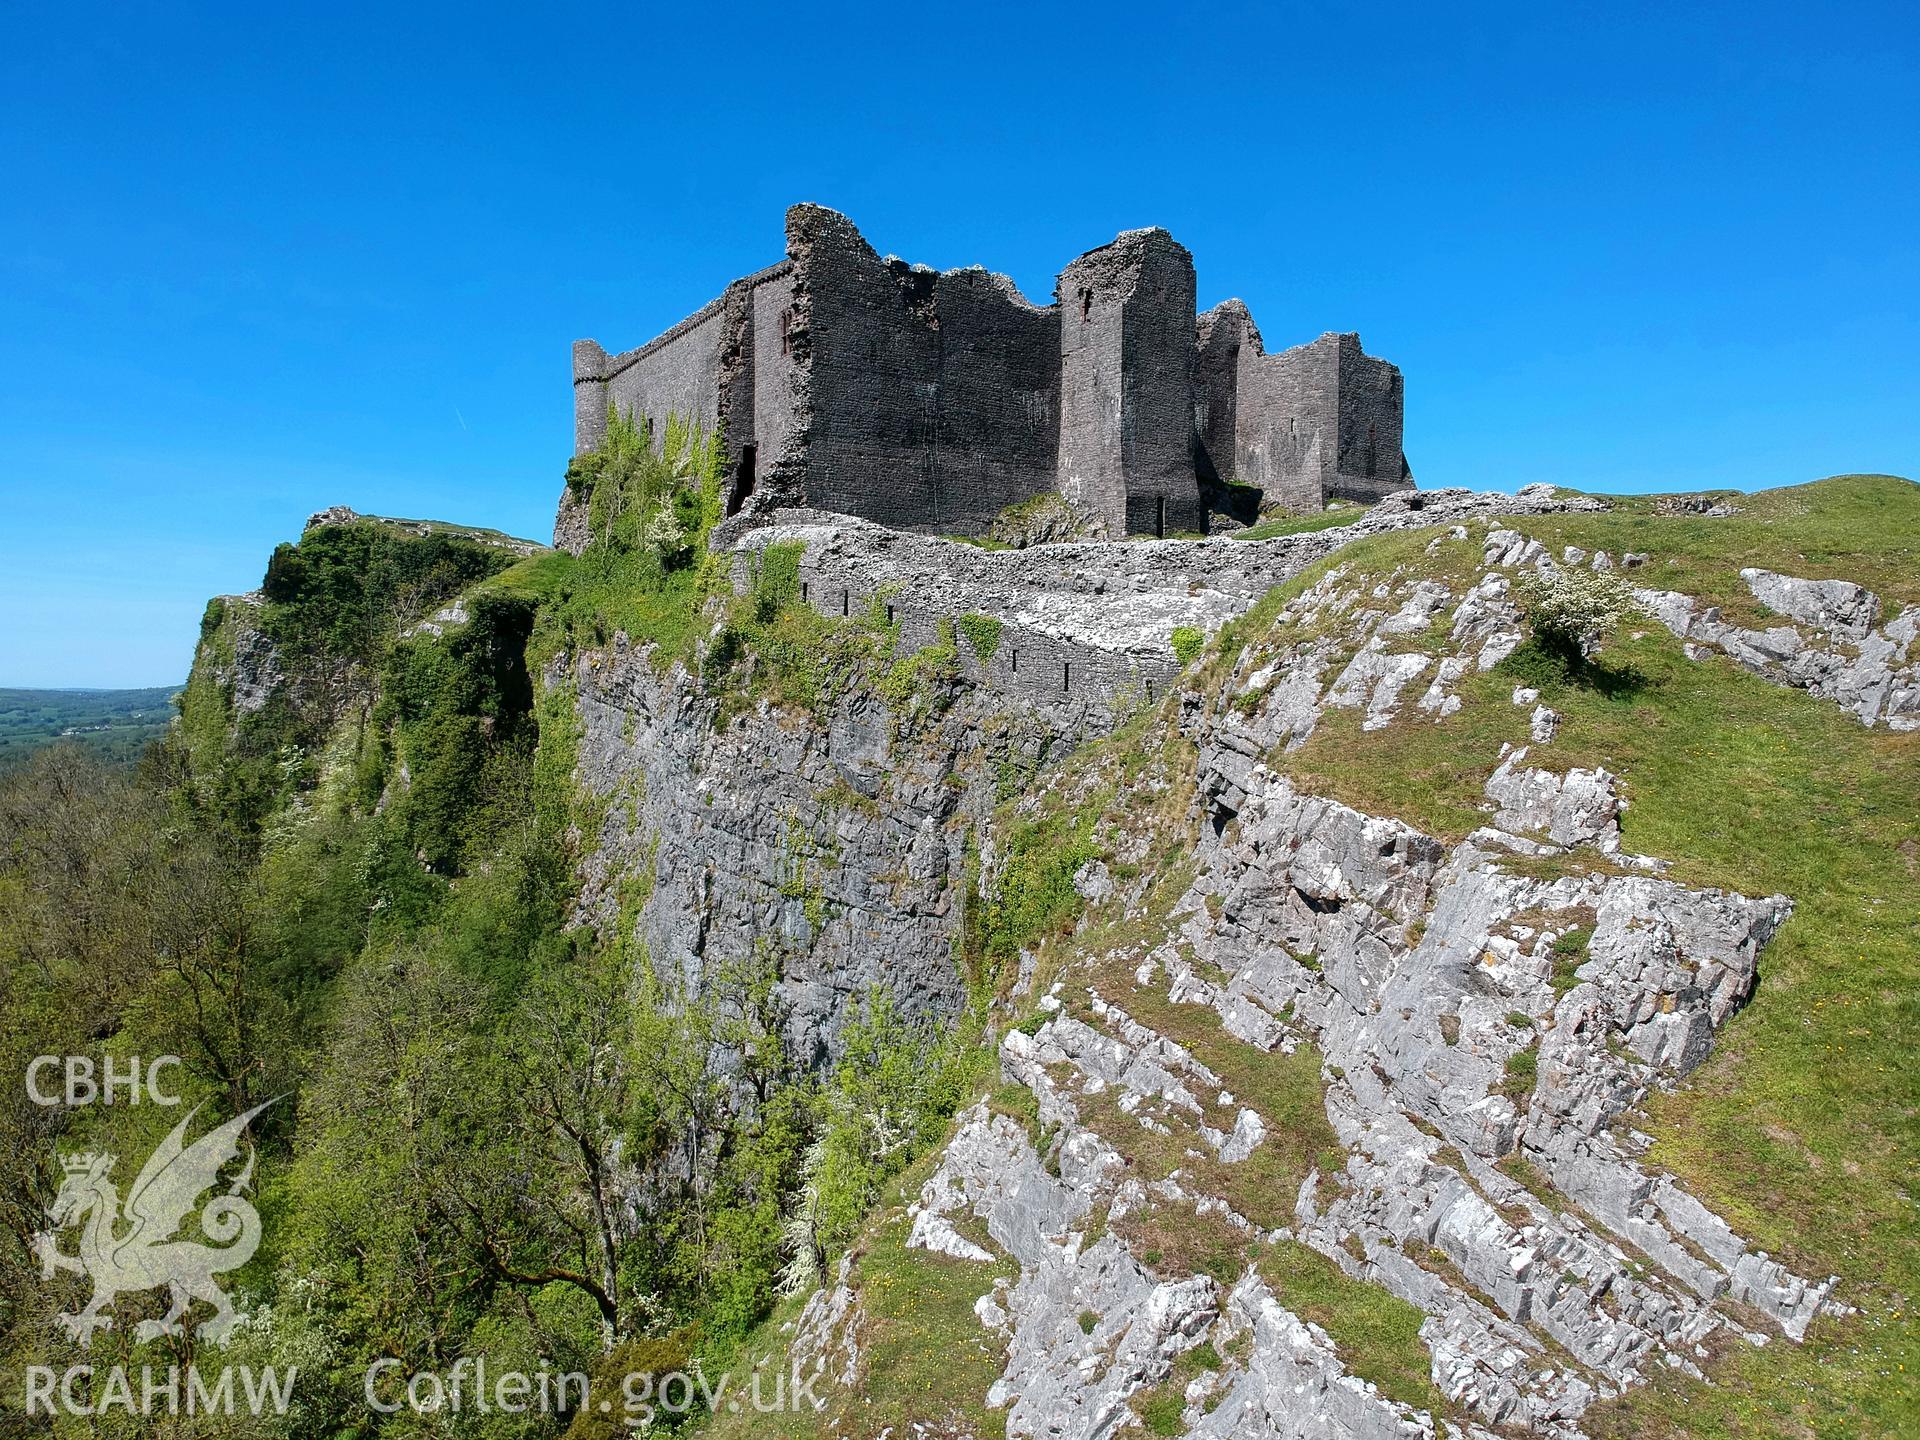 Digital colour photograph of Carreg Cennen Castle, Dyffryn Cennen, Llandeilo, taken by Paul R. Davis on 12th May 2019.